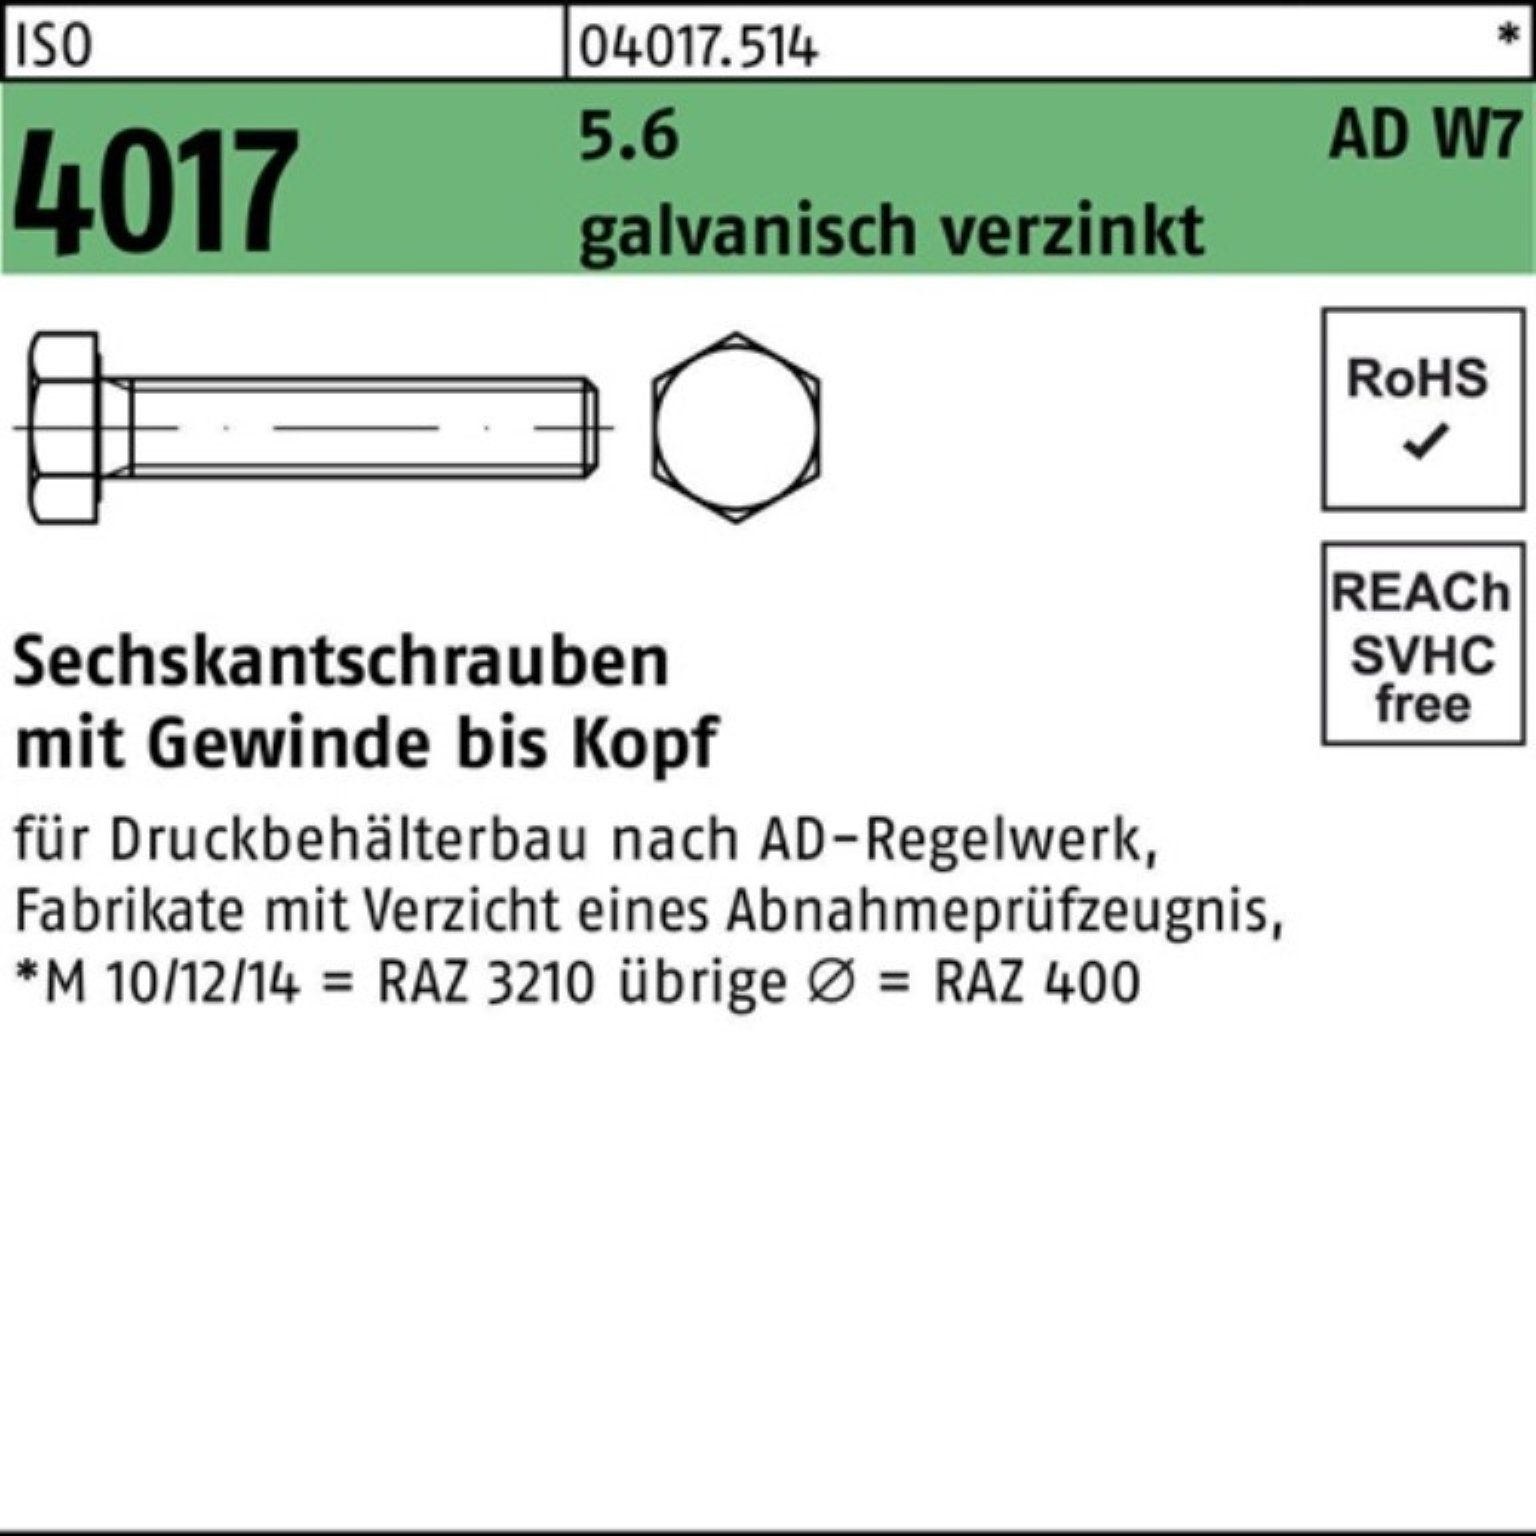 VG galv.verz. Sechskantschraube 5.6 Bufab 140 Pack 100er ISO AD 4017 W7 M27x Sechskantschraube